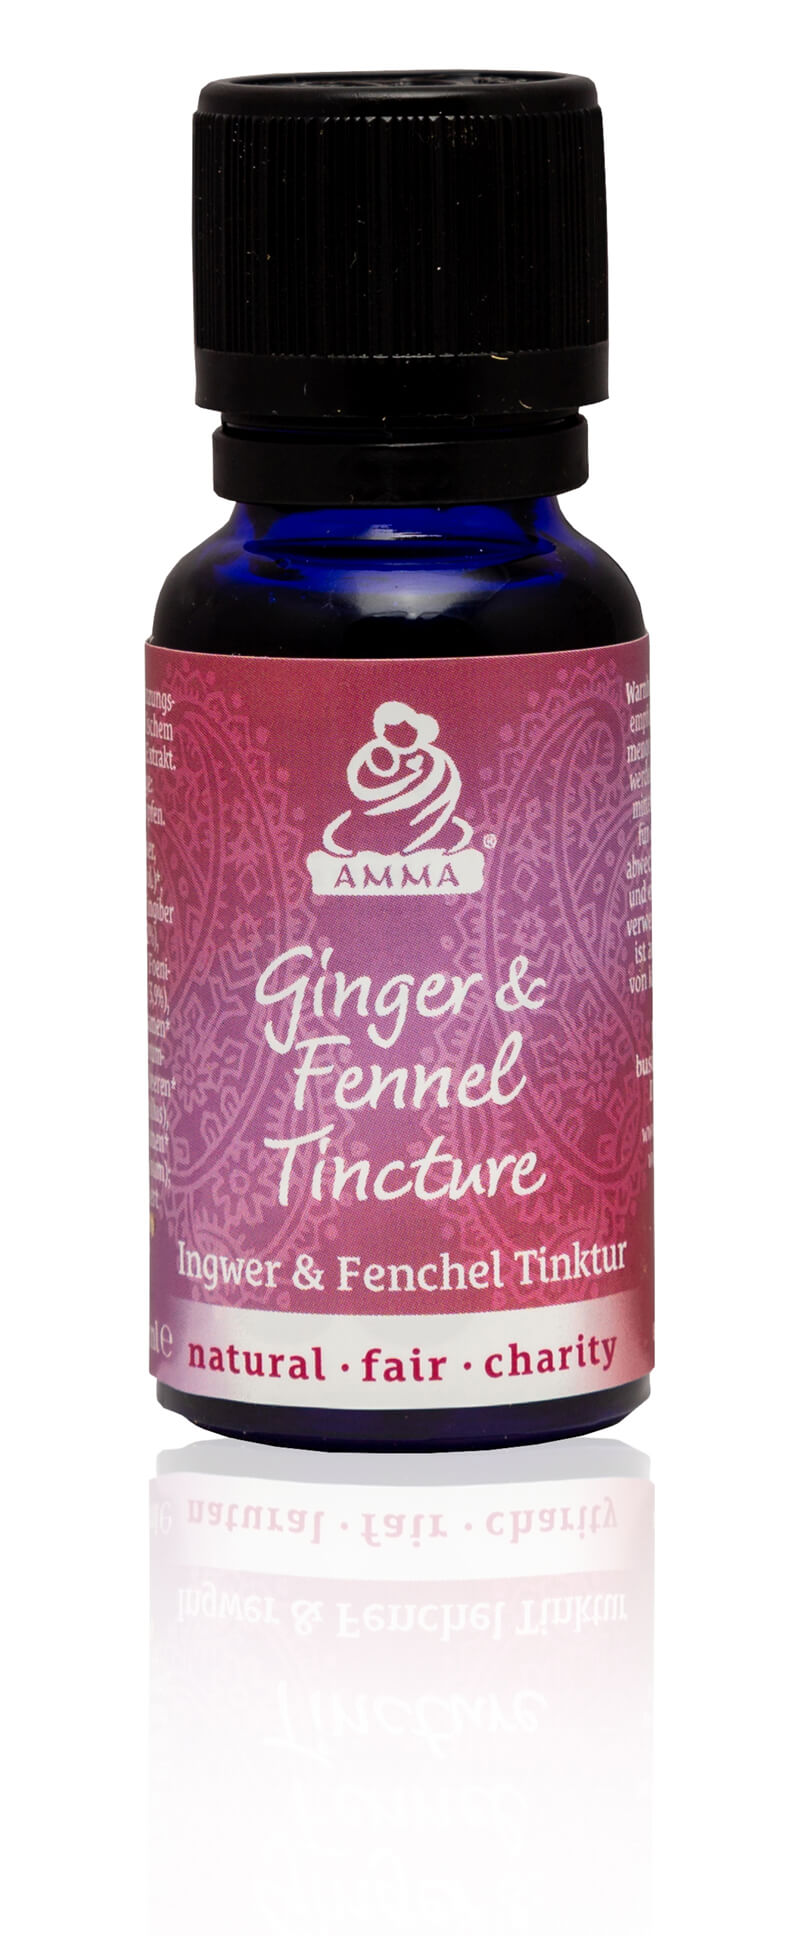 Ginger & Fennel Tincture, organic